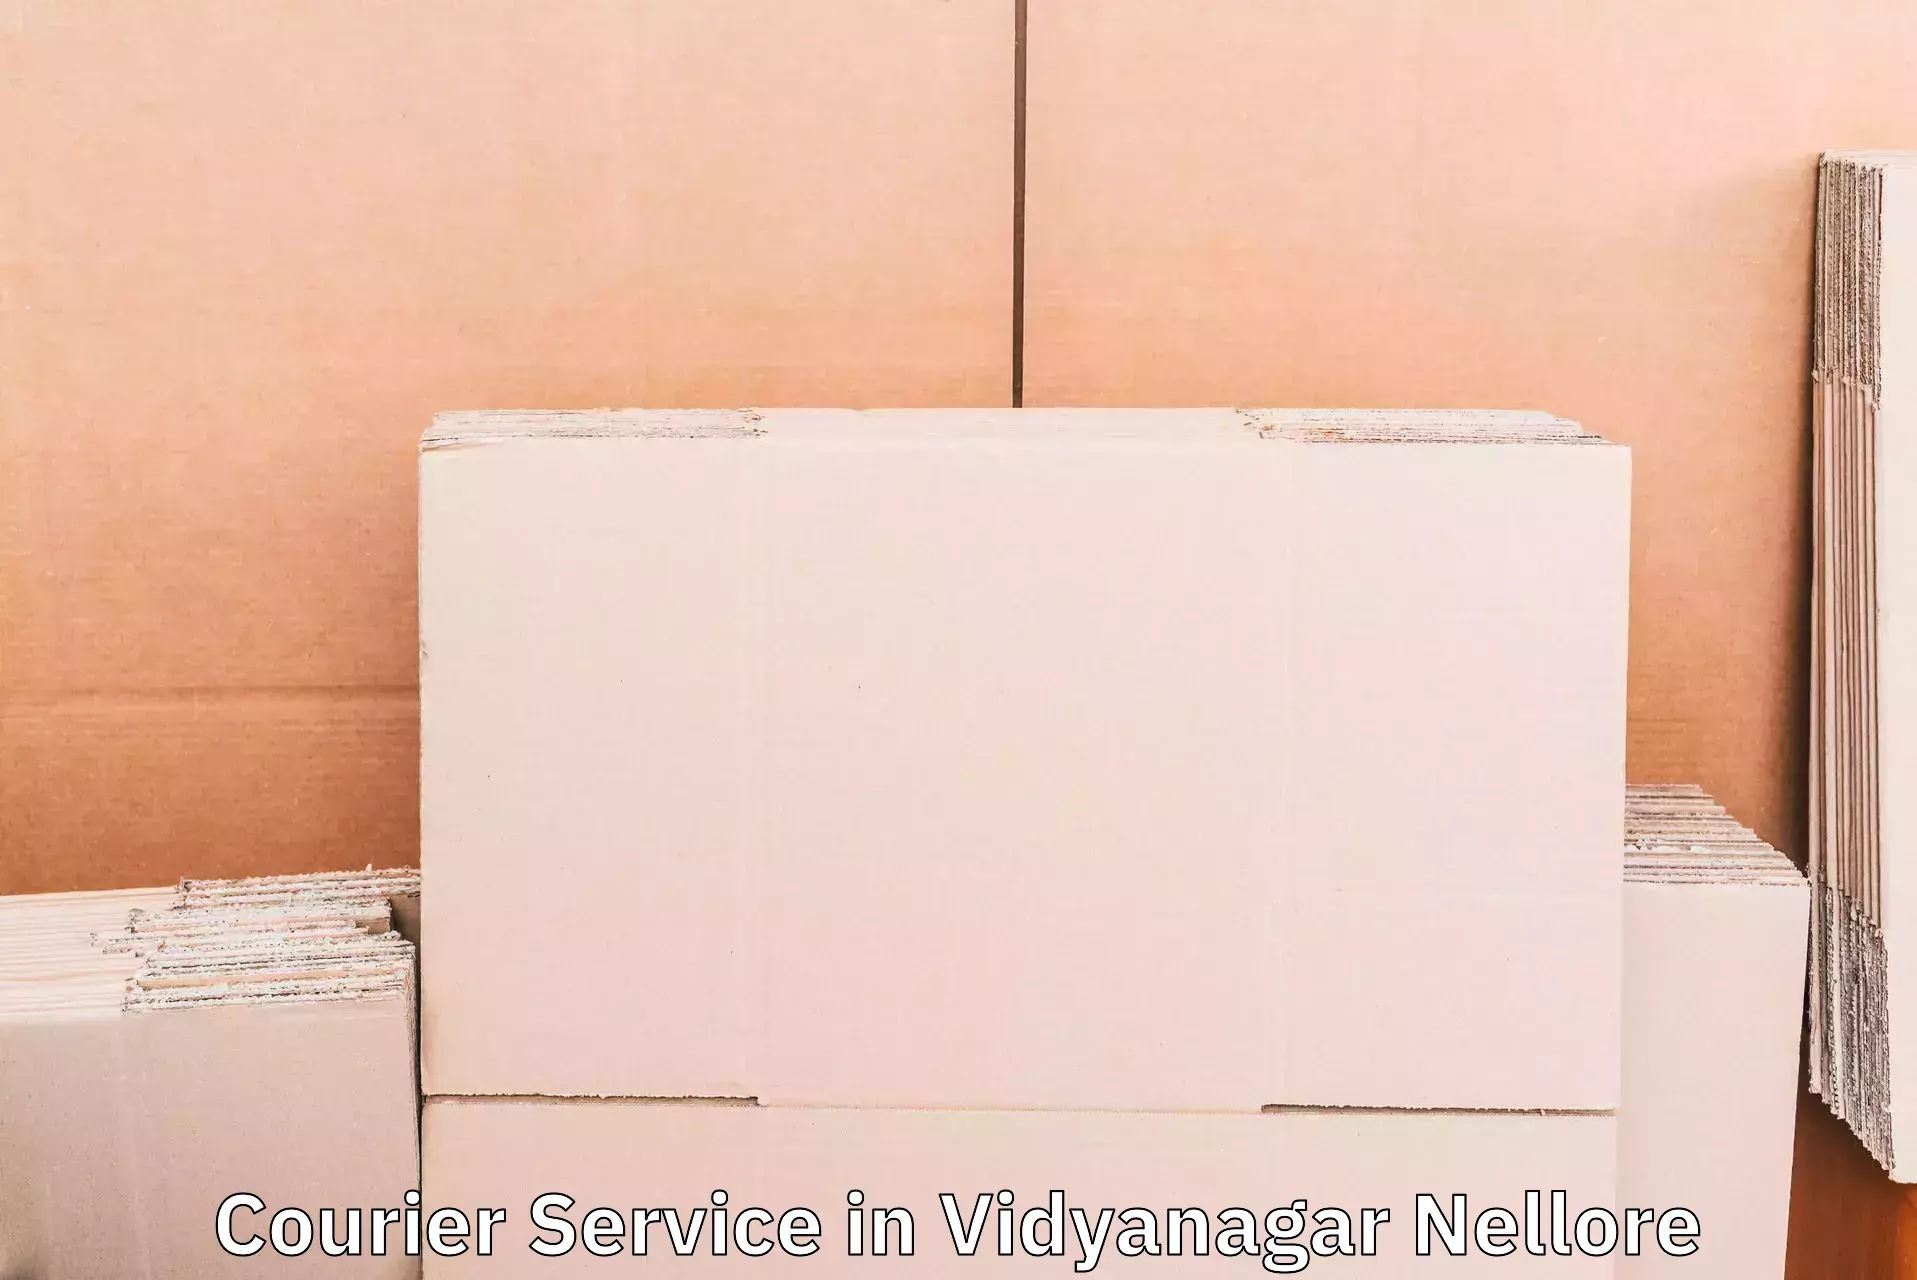 Multi-carrier shipping in Vidyanagar Nellore